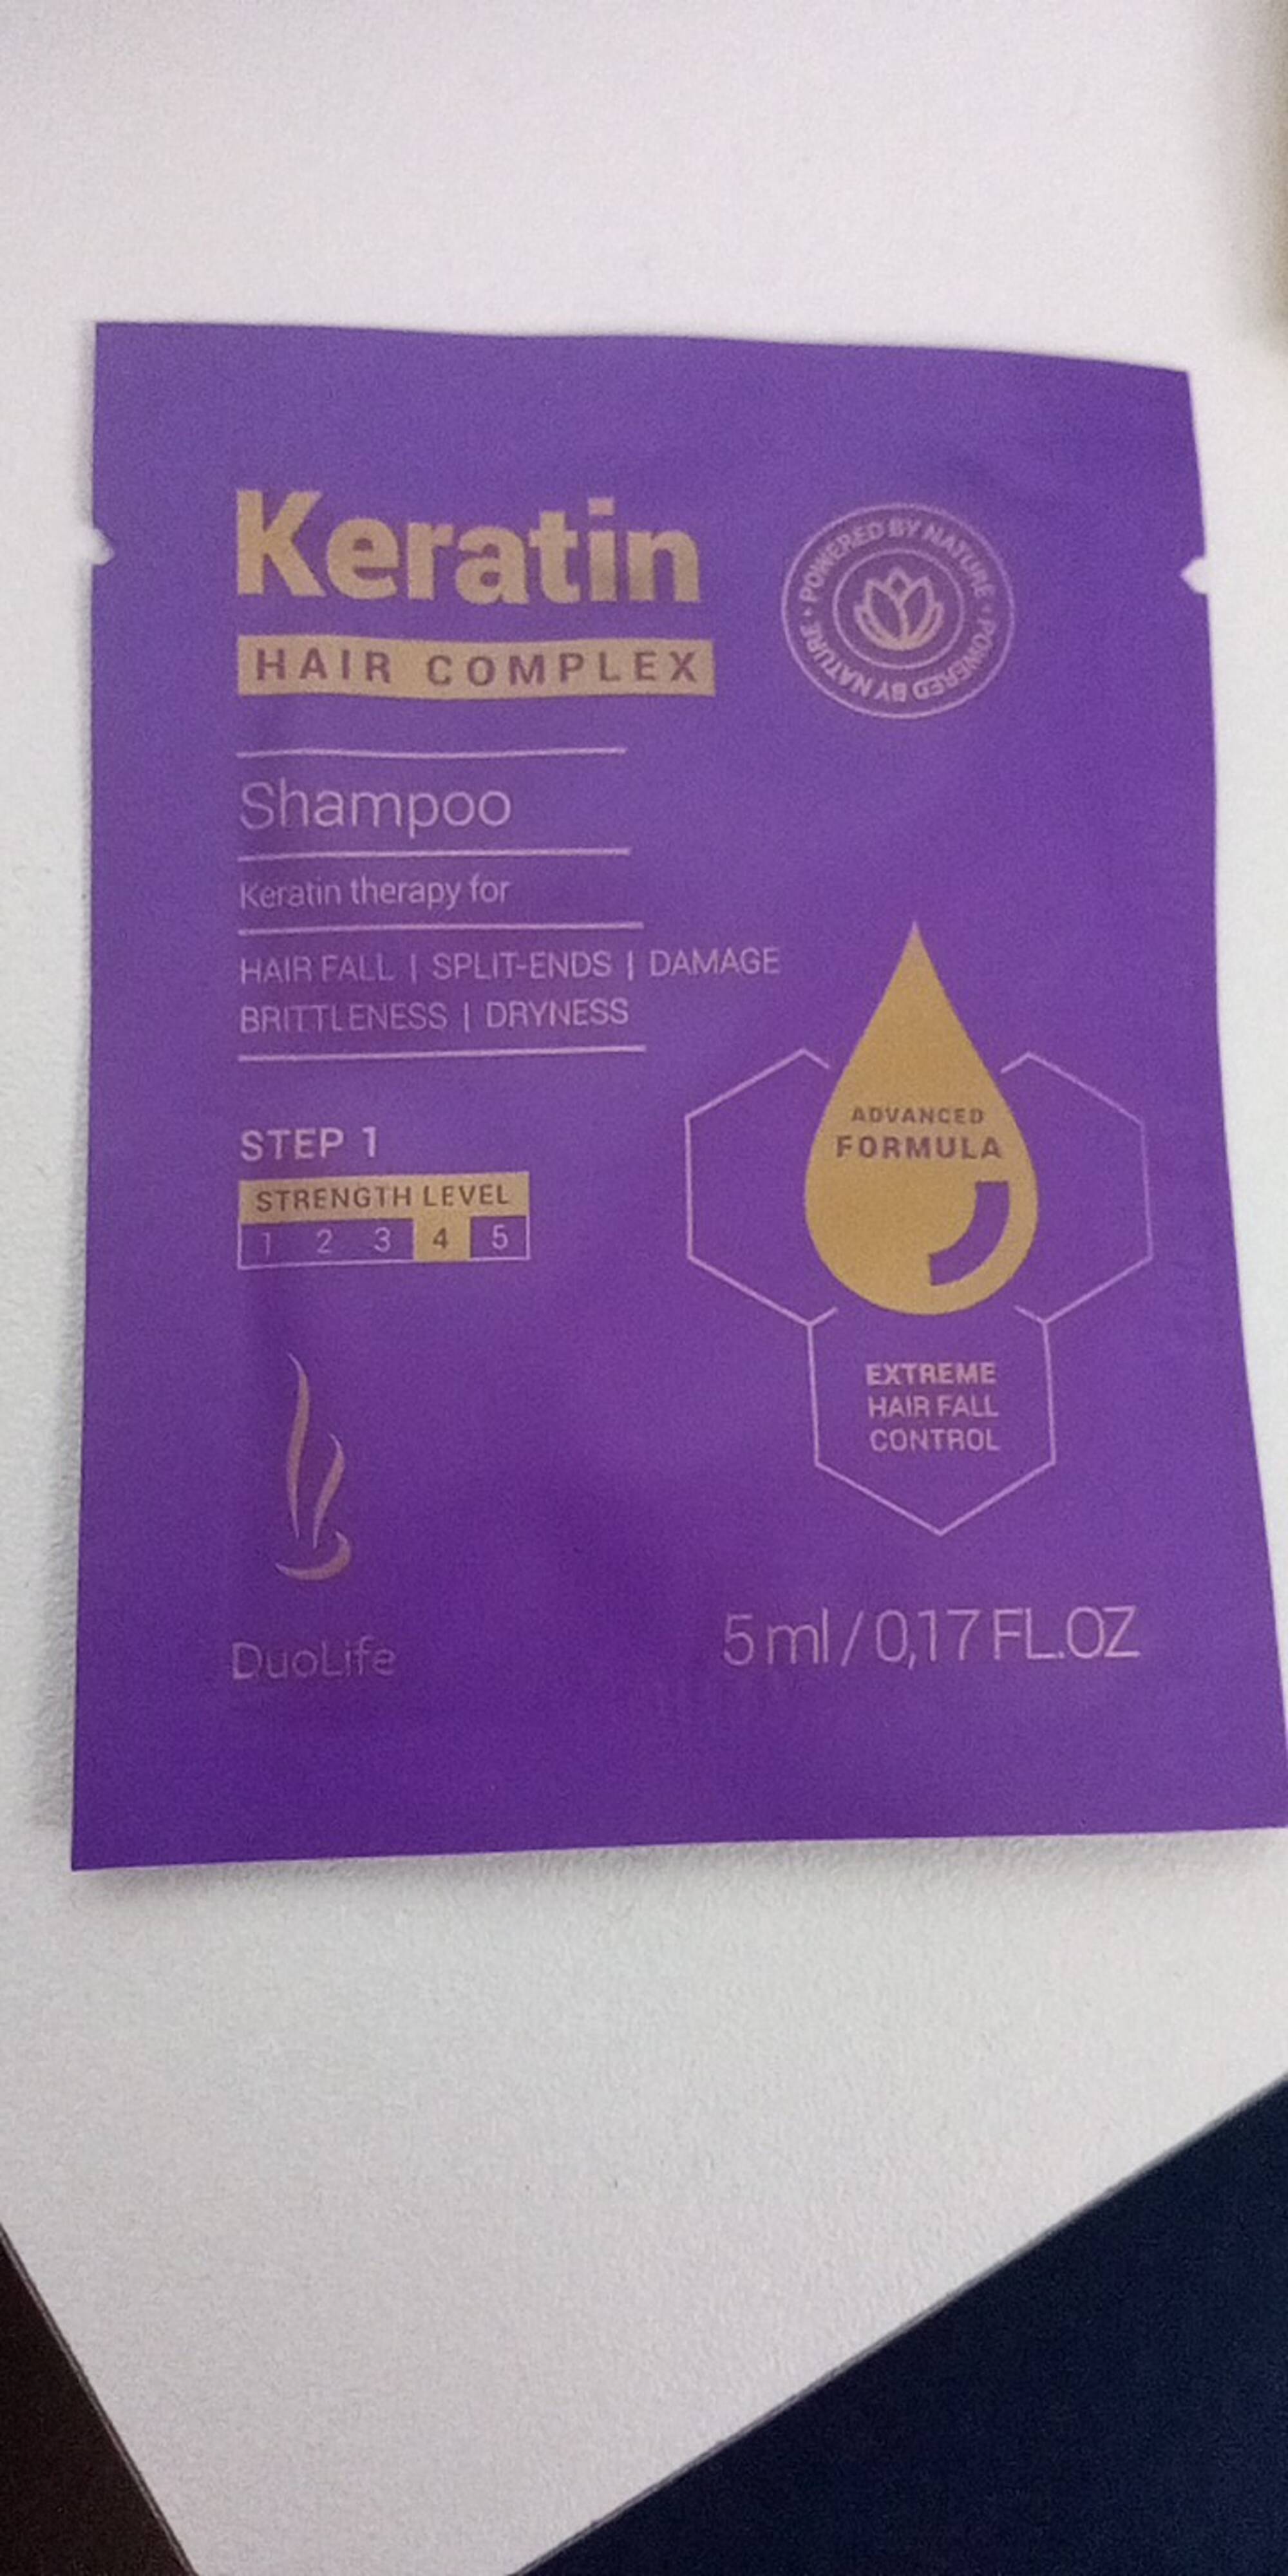 DUOLIFE - Keratin hair complex Shampoo